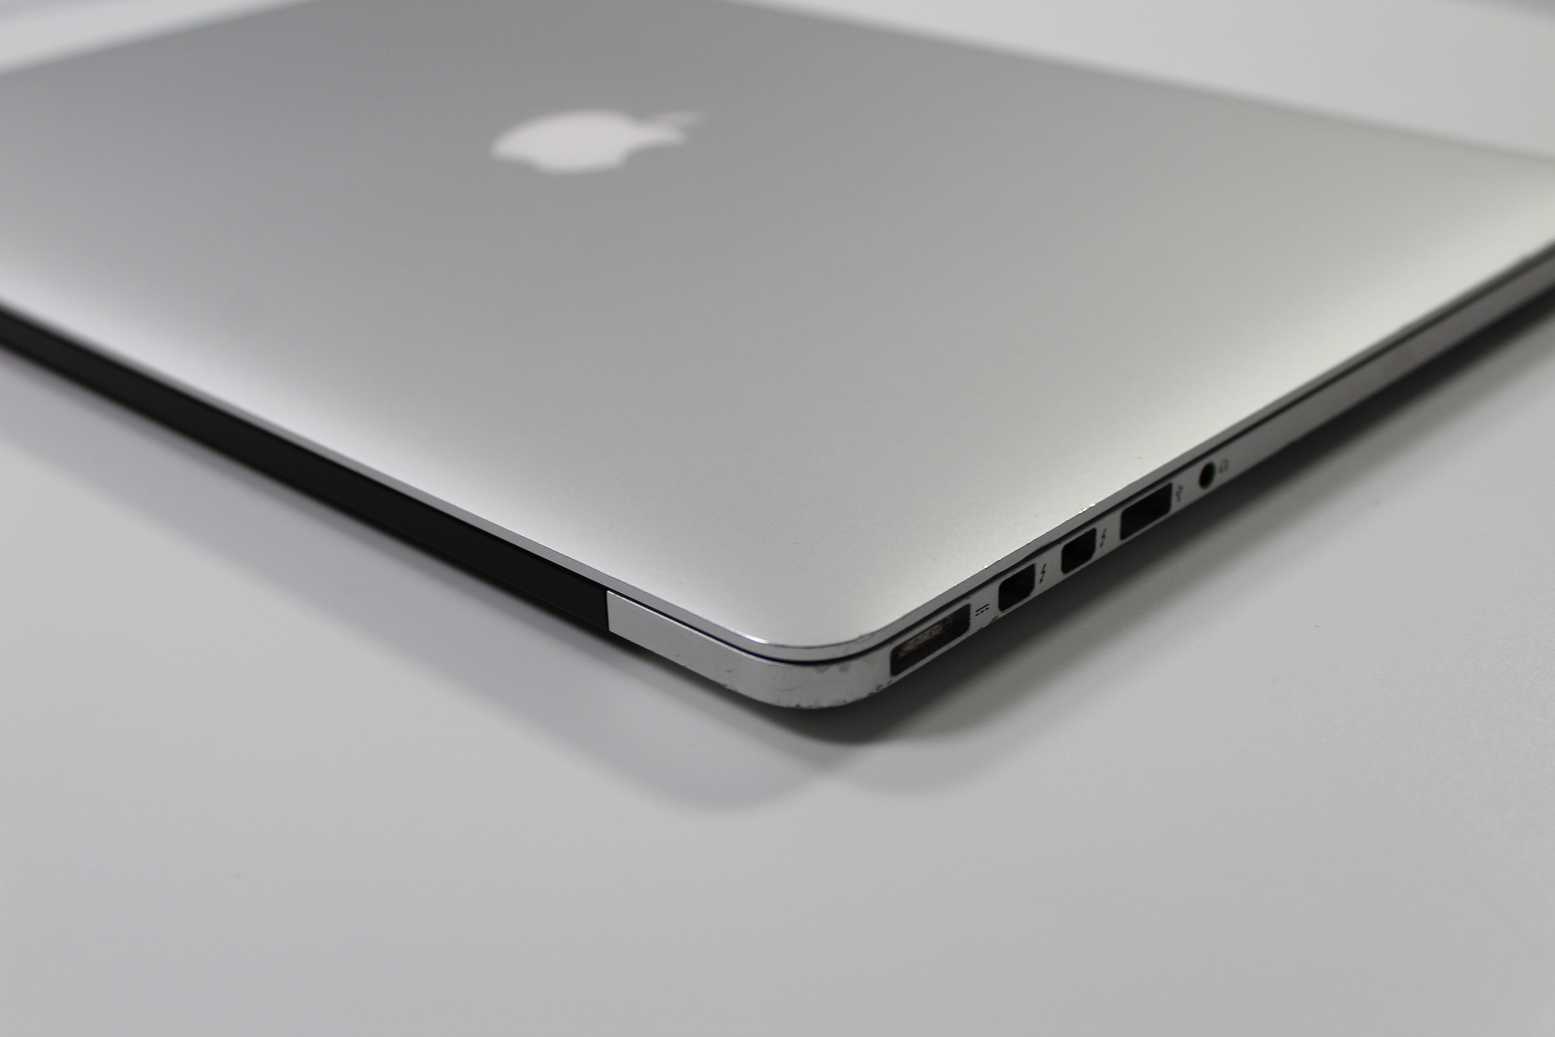 Apple MacBook Pro 15-inch 2014 2.5GHz Core i7 15